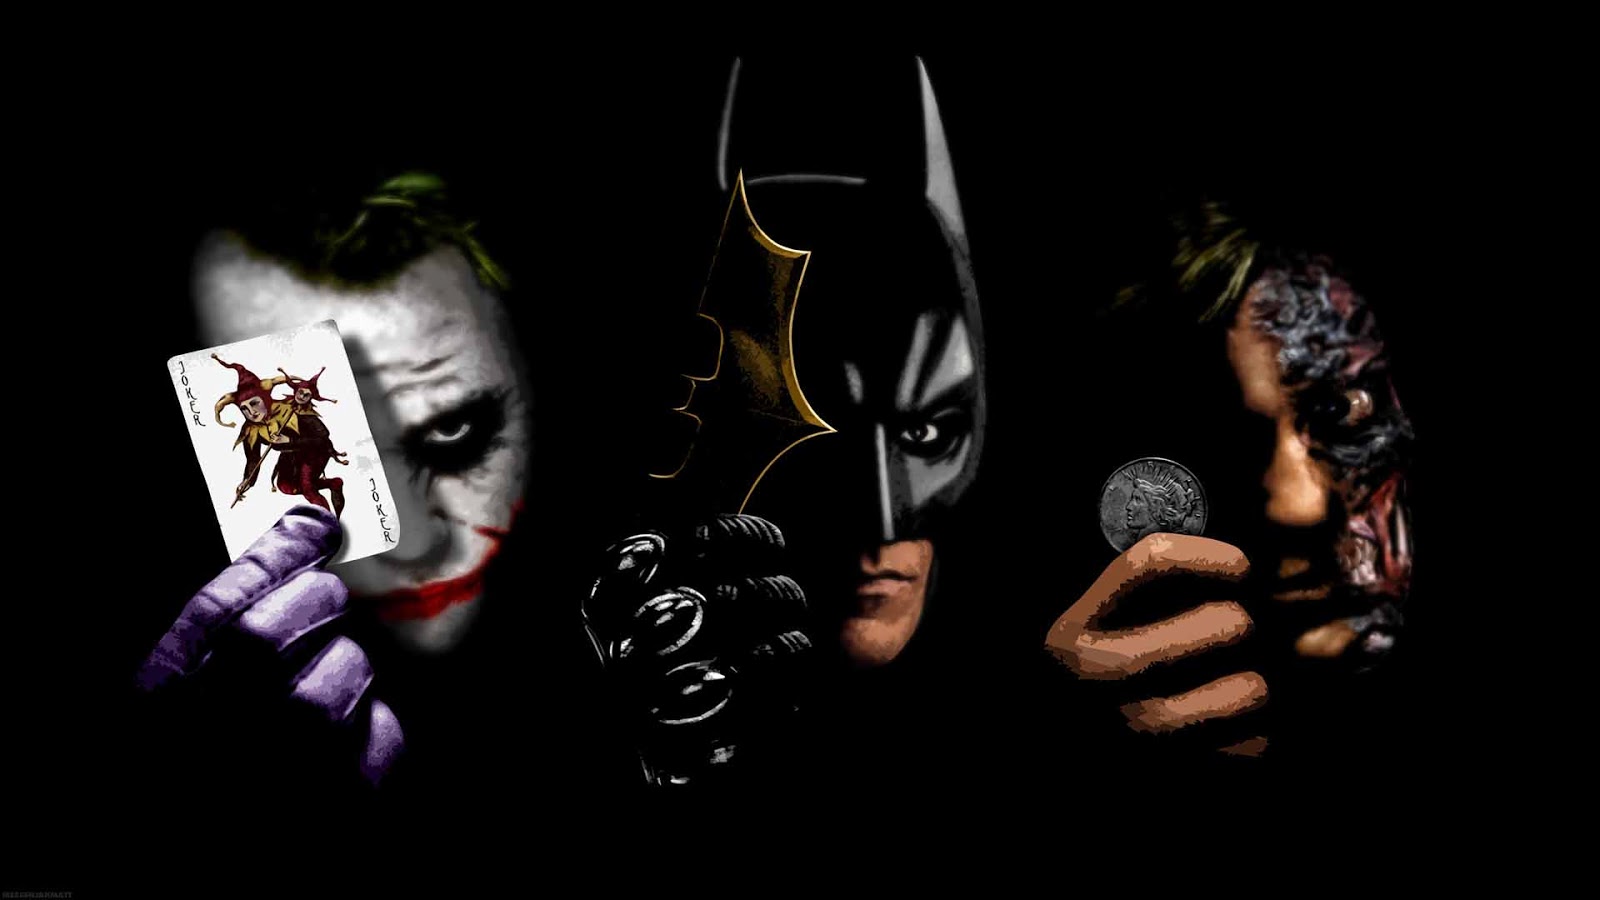 Joker HD Wallpaper Pics